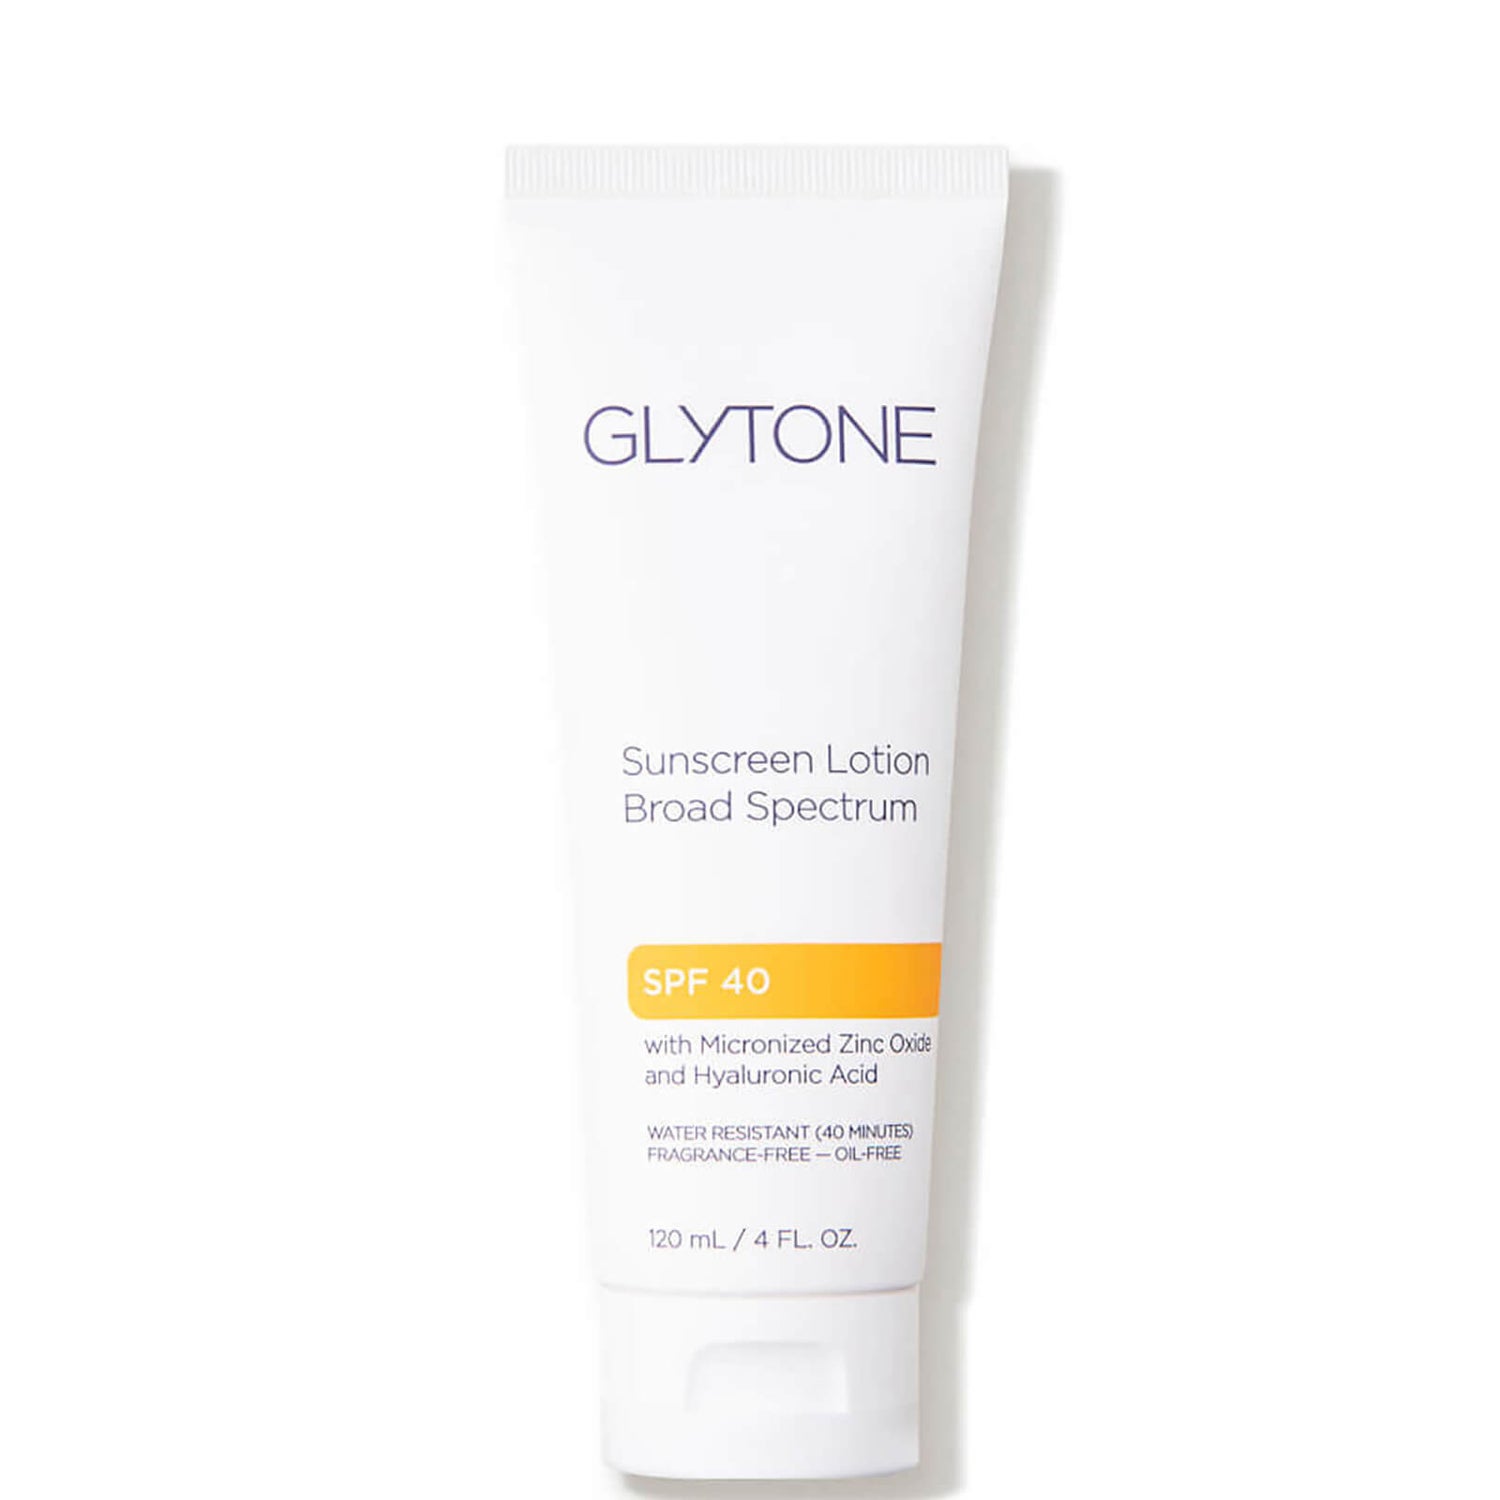 Glytone Sunscreen Lotion Broad Spectrum SPF 40